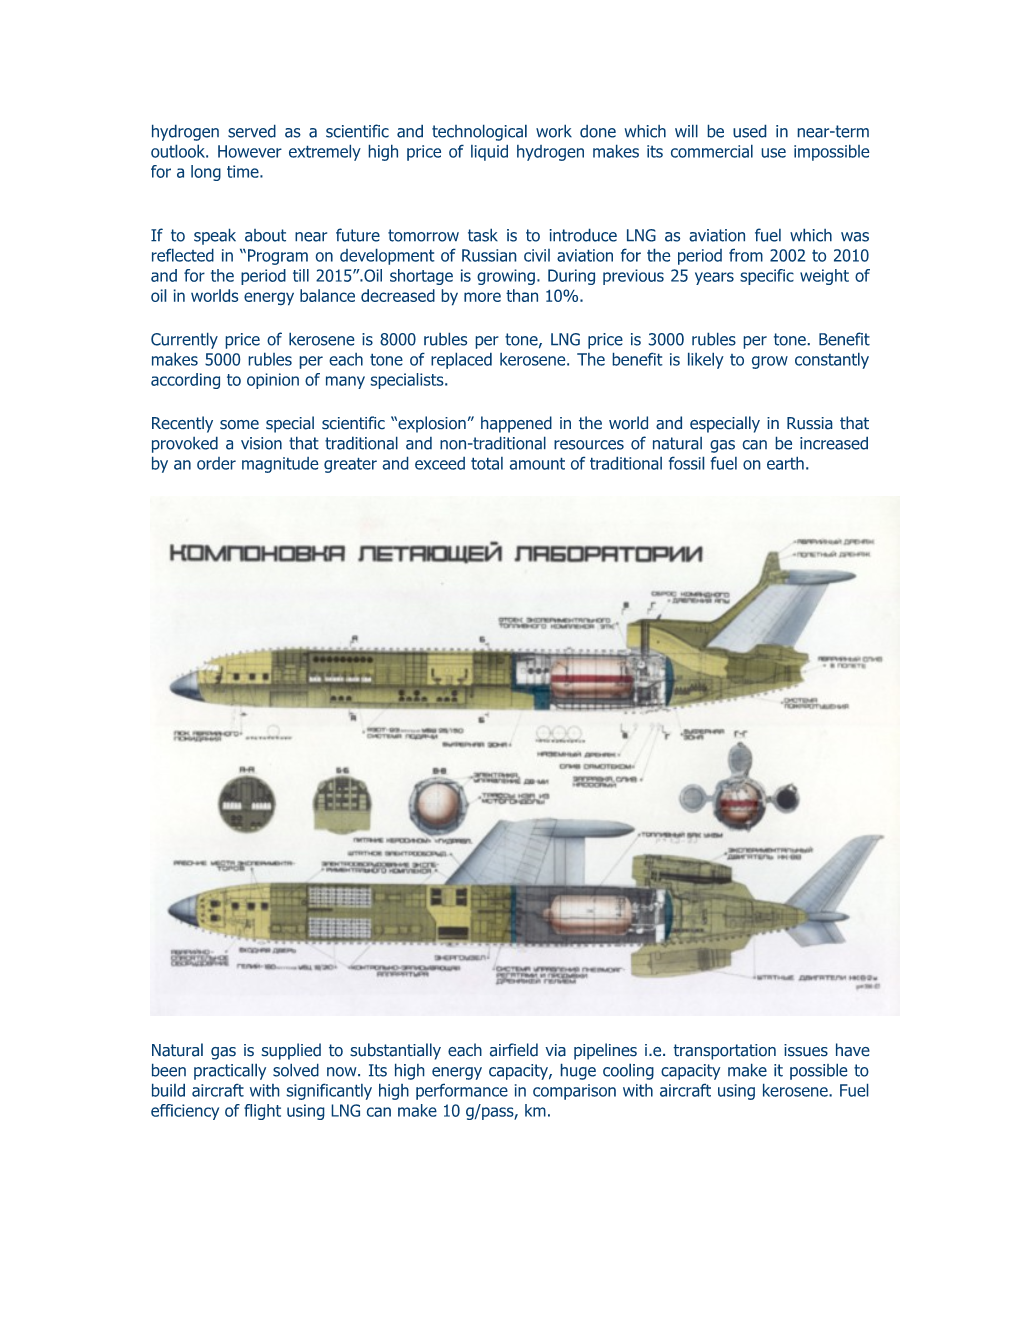 Development of Cryogenic Fuel Aircraft